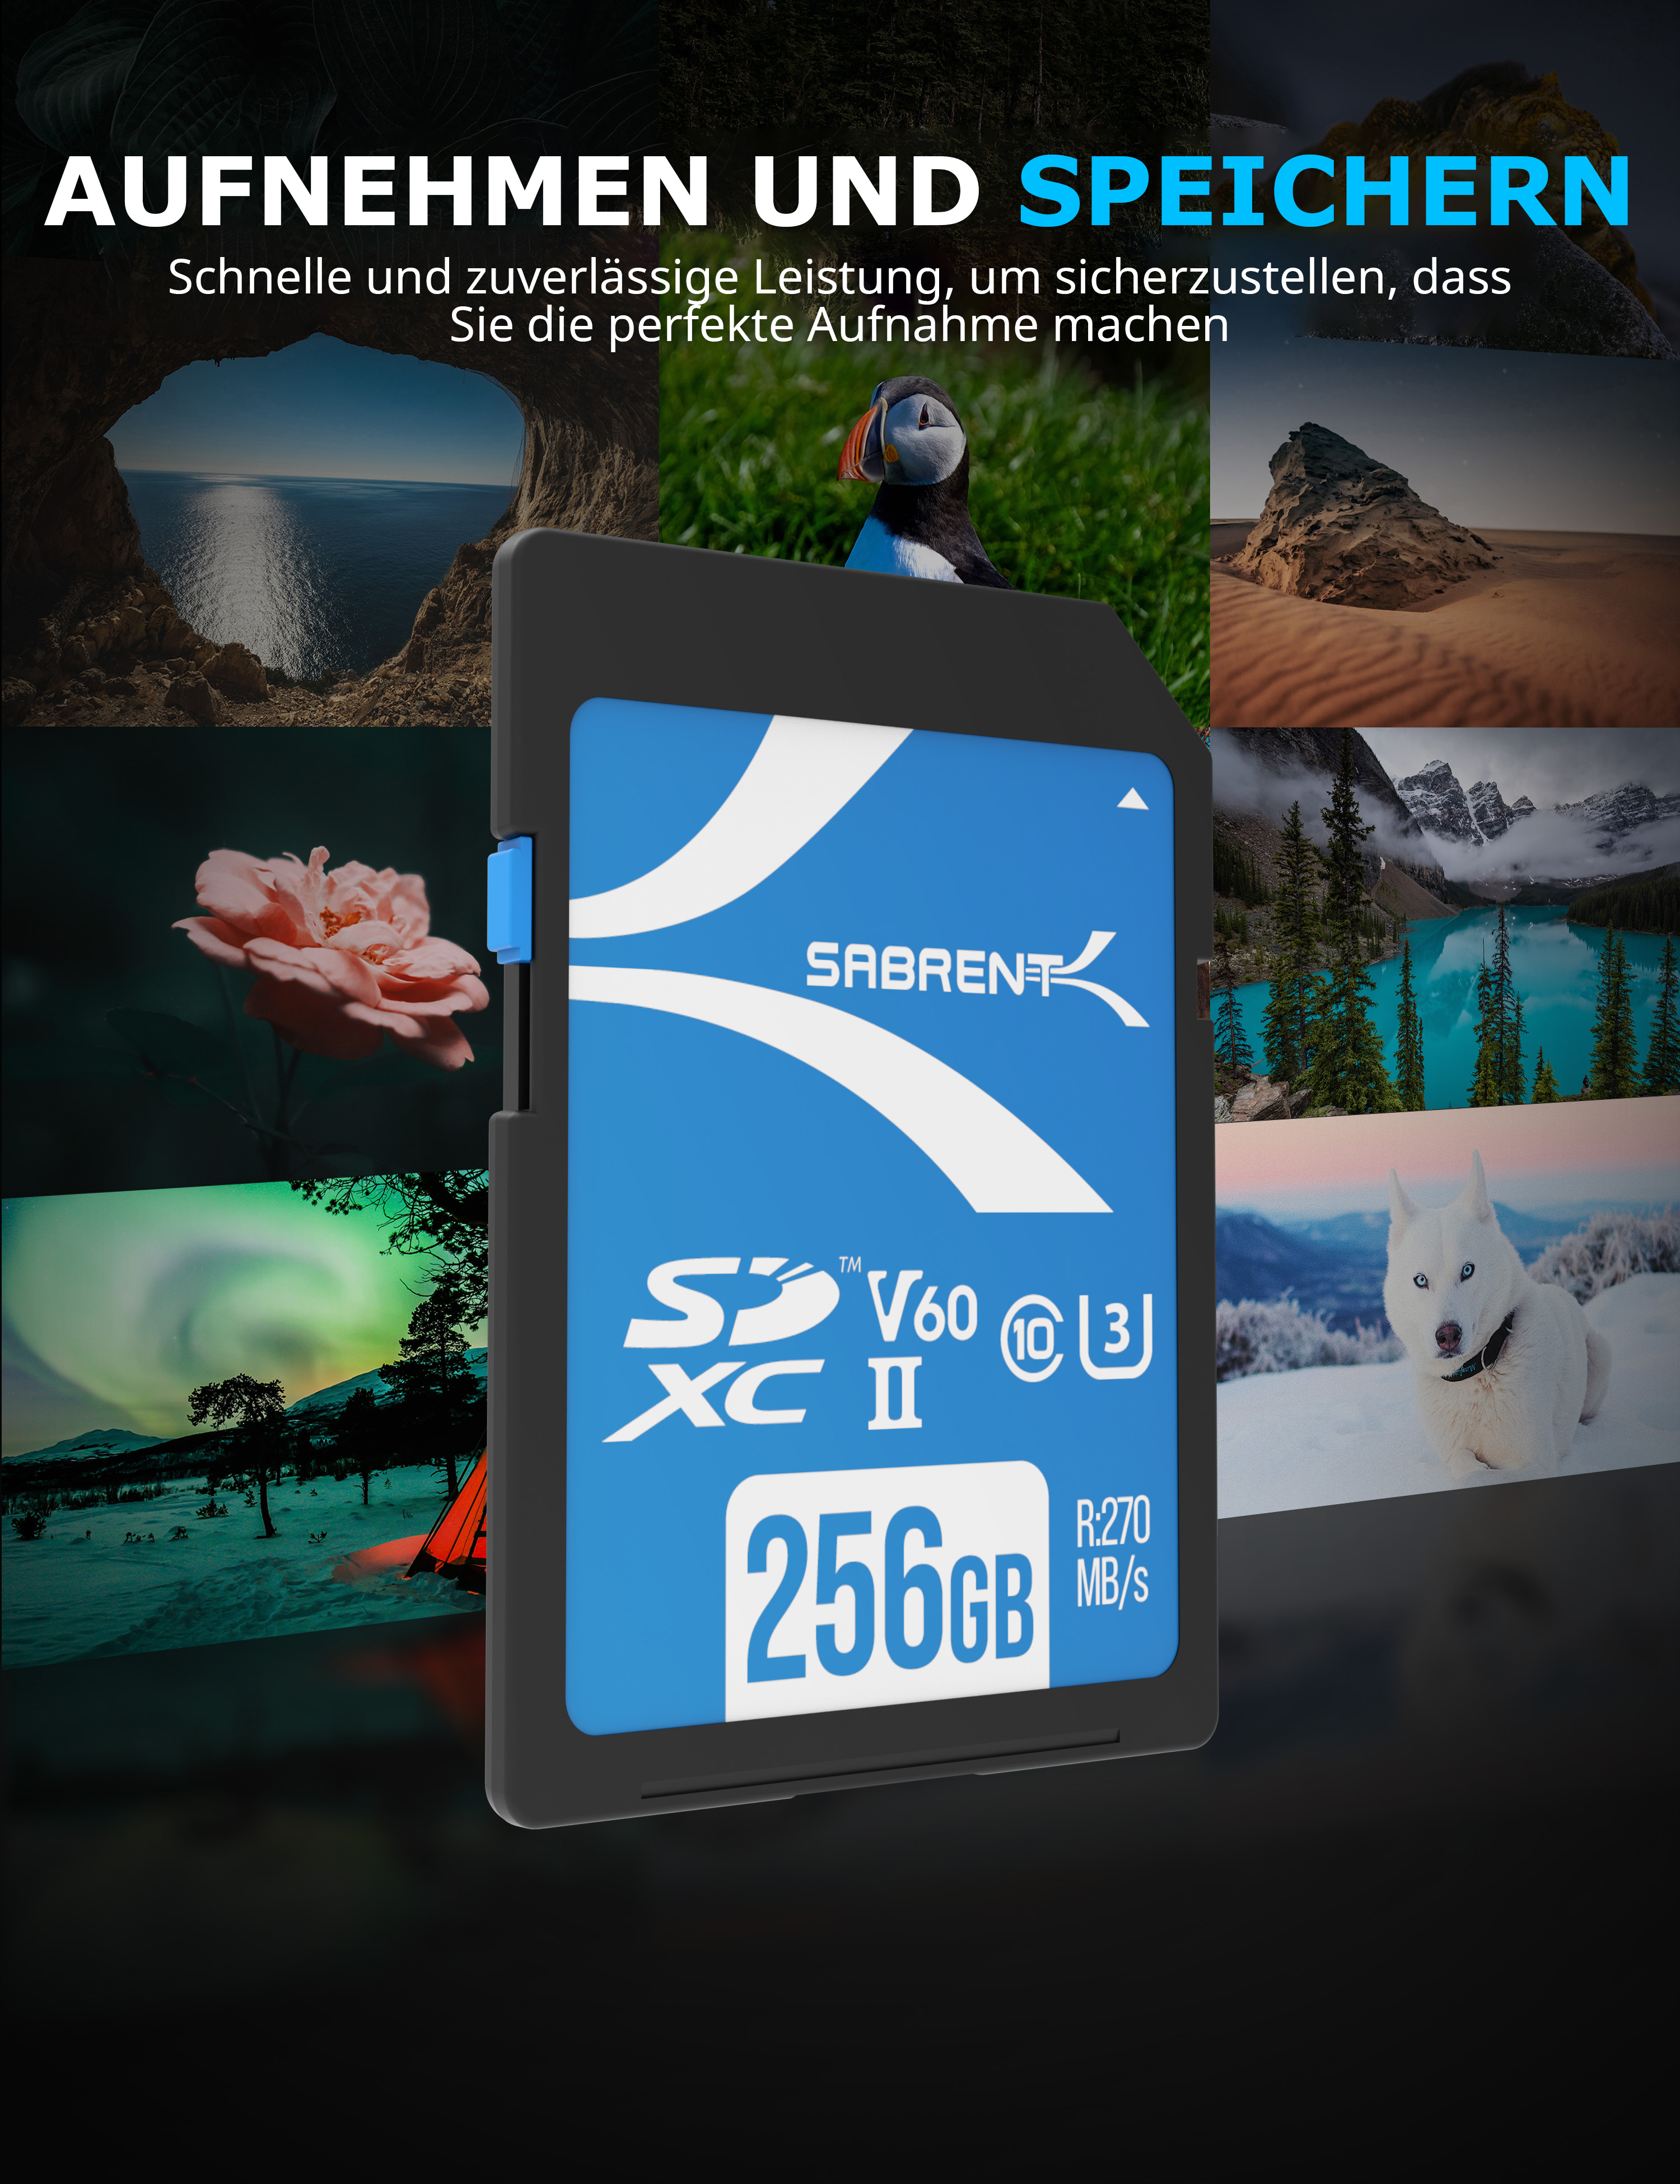 SD SDXC SABRENT 256GB 256 270 V60 Karte, GB, MB/s UHS-II, SD